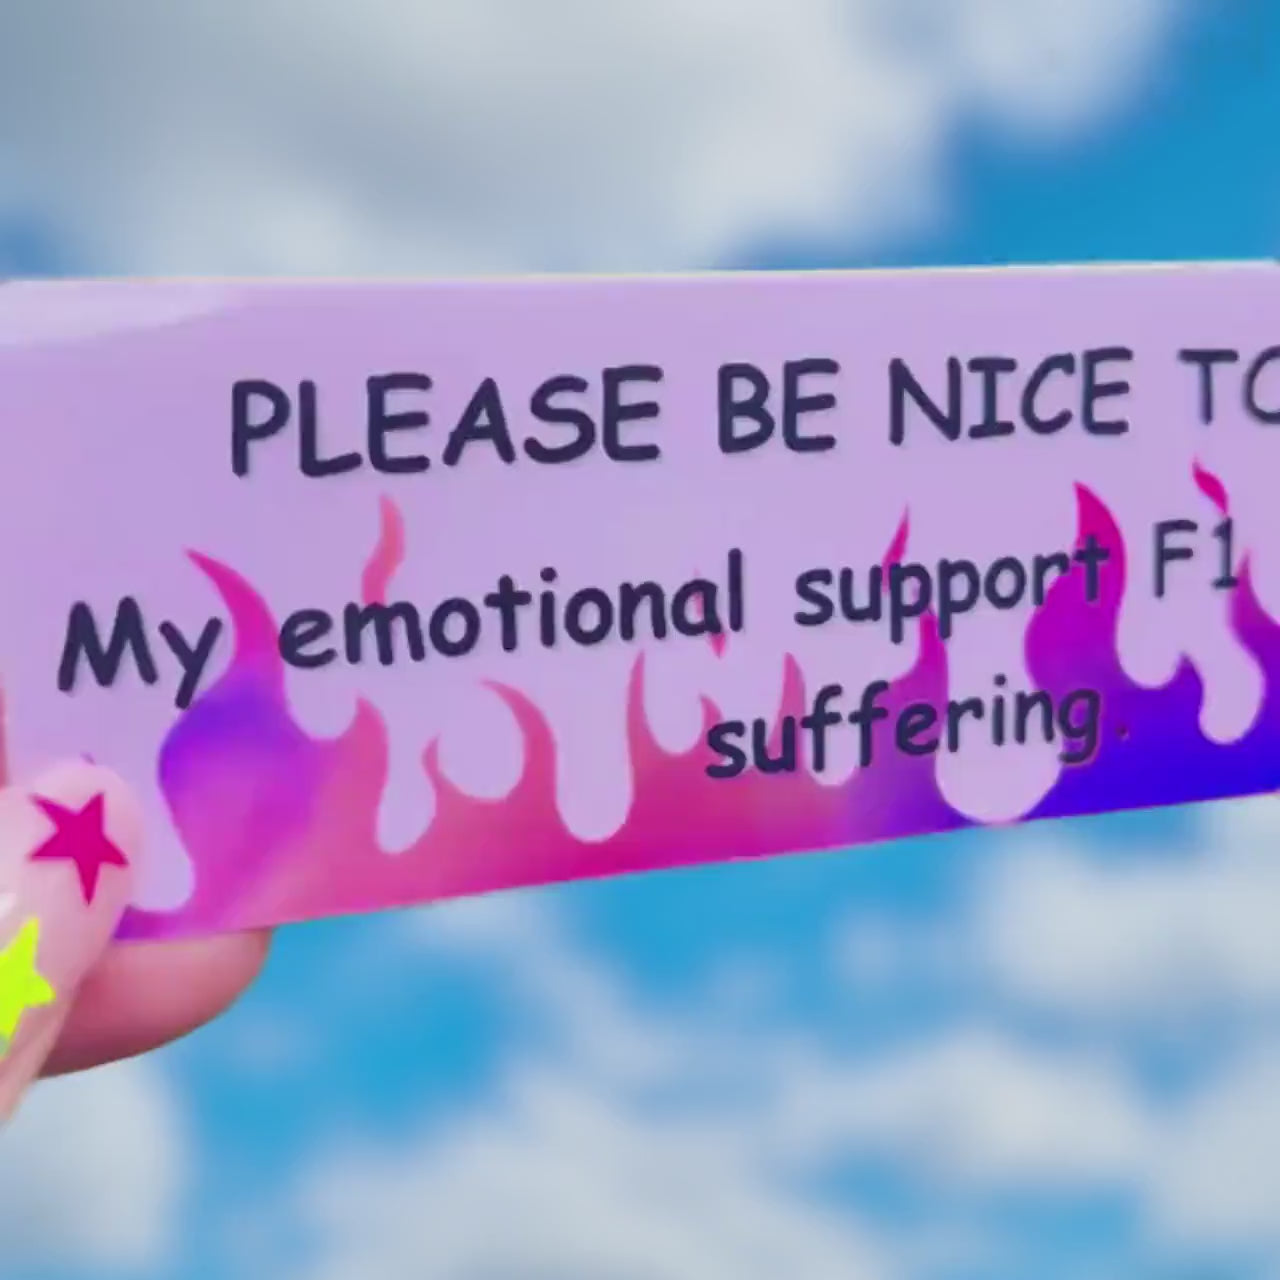 Emotional Support F1 driver sticker